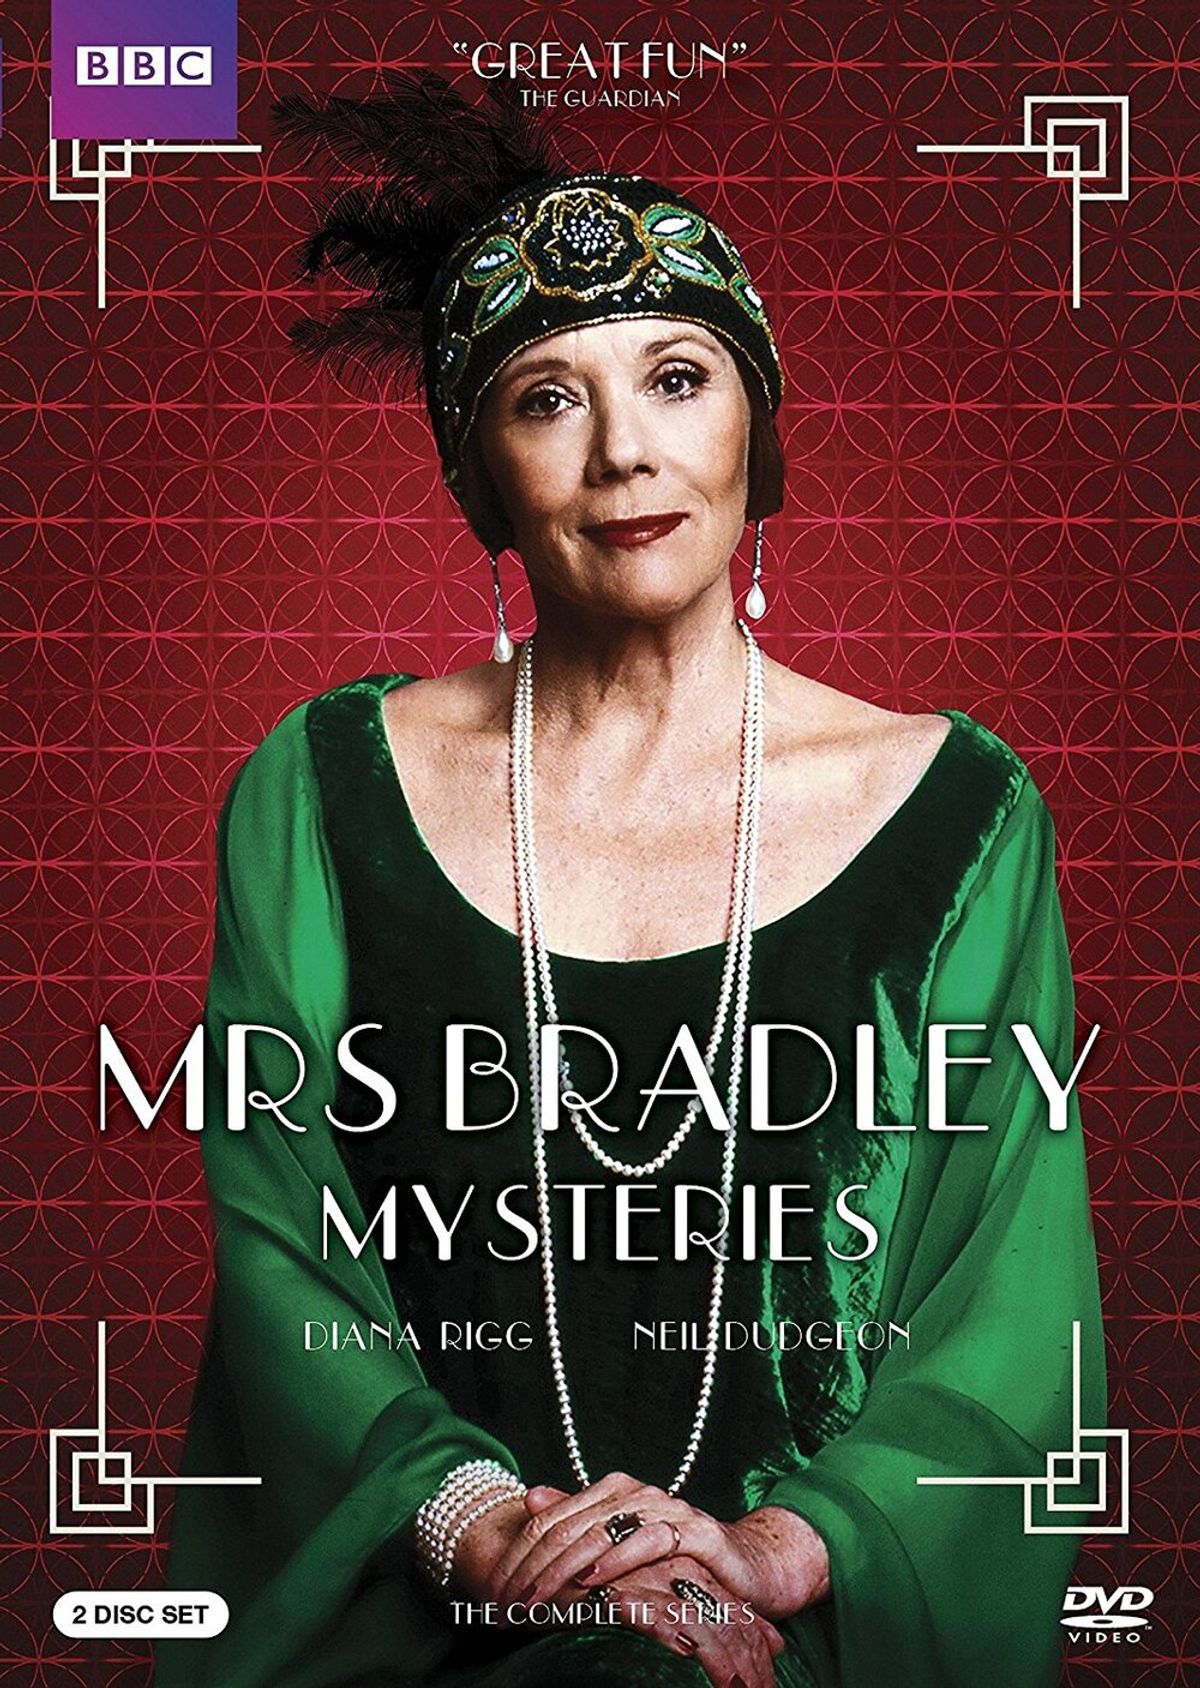 The Mrs Bradley Mysteries (Series) - TV Tropes